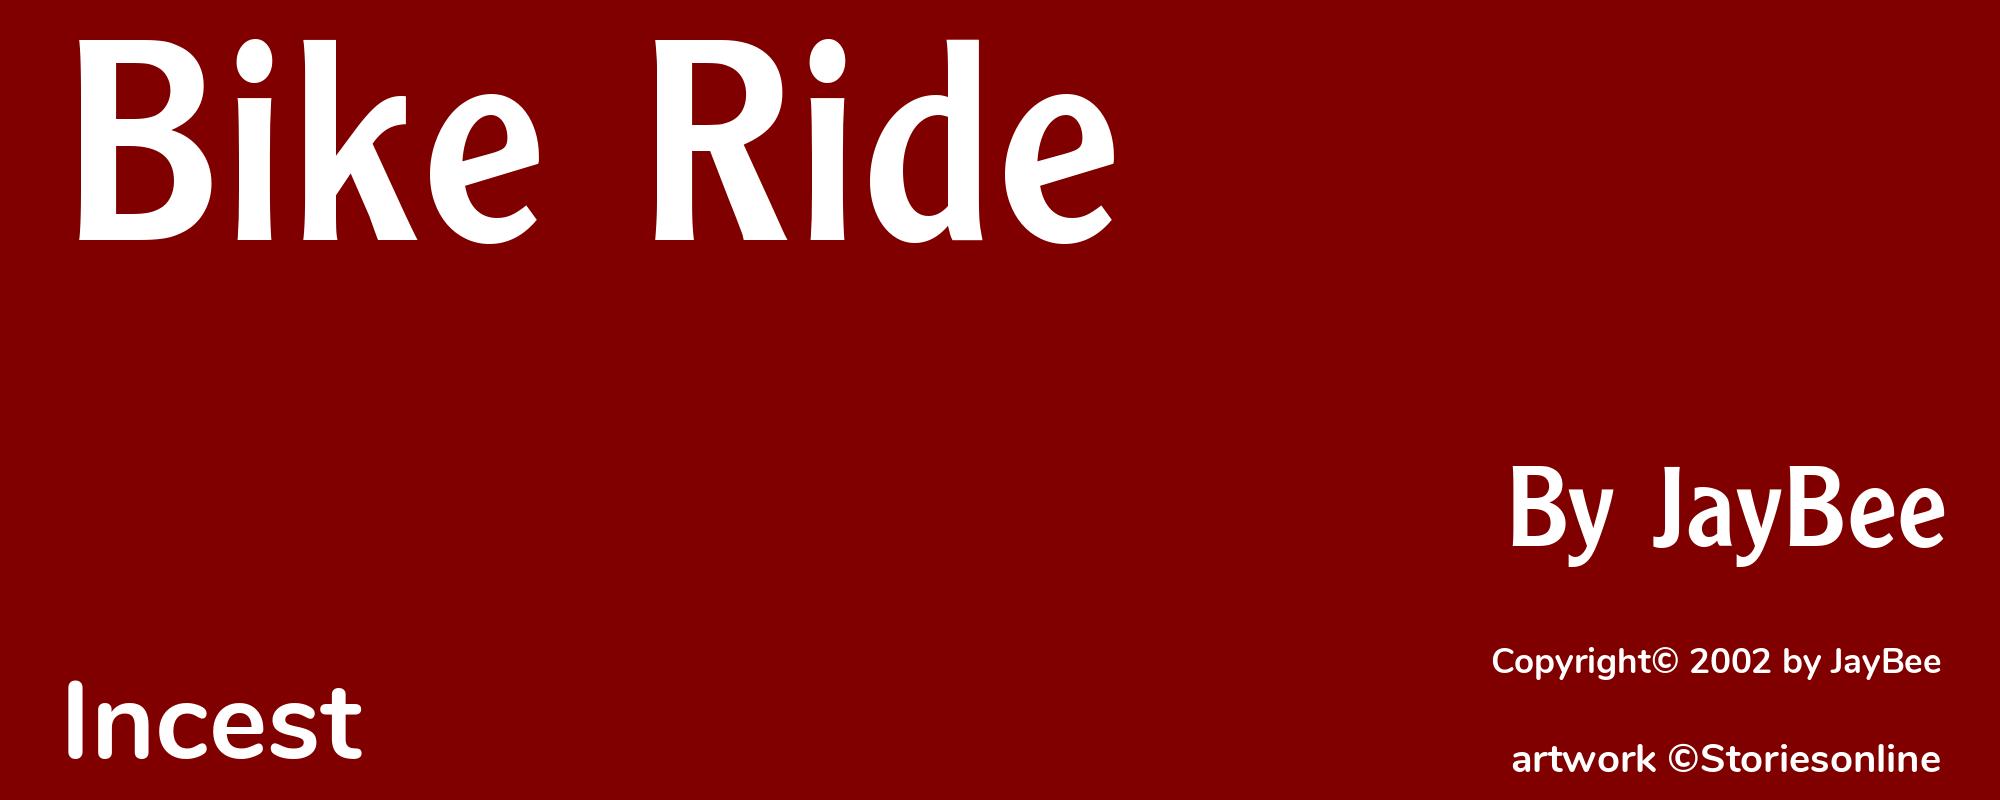 Bike Ride - Cover